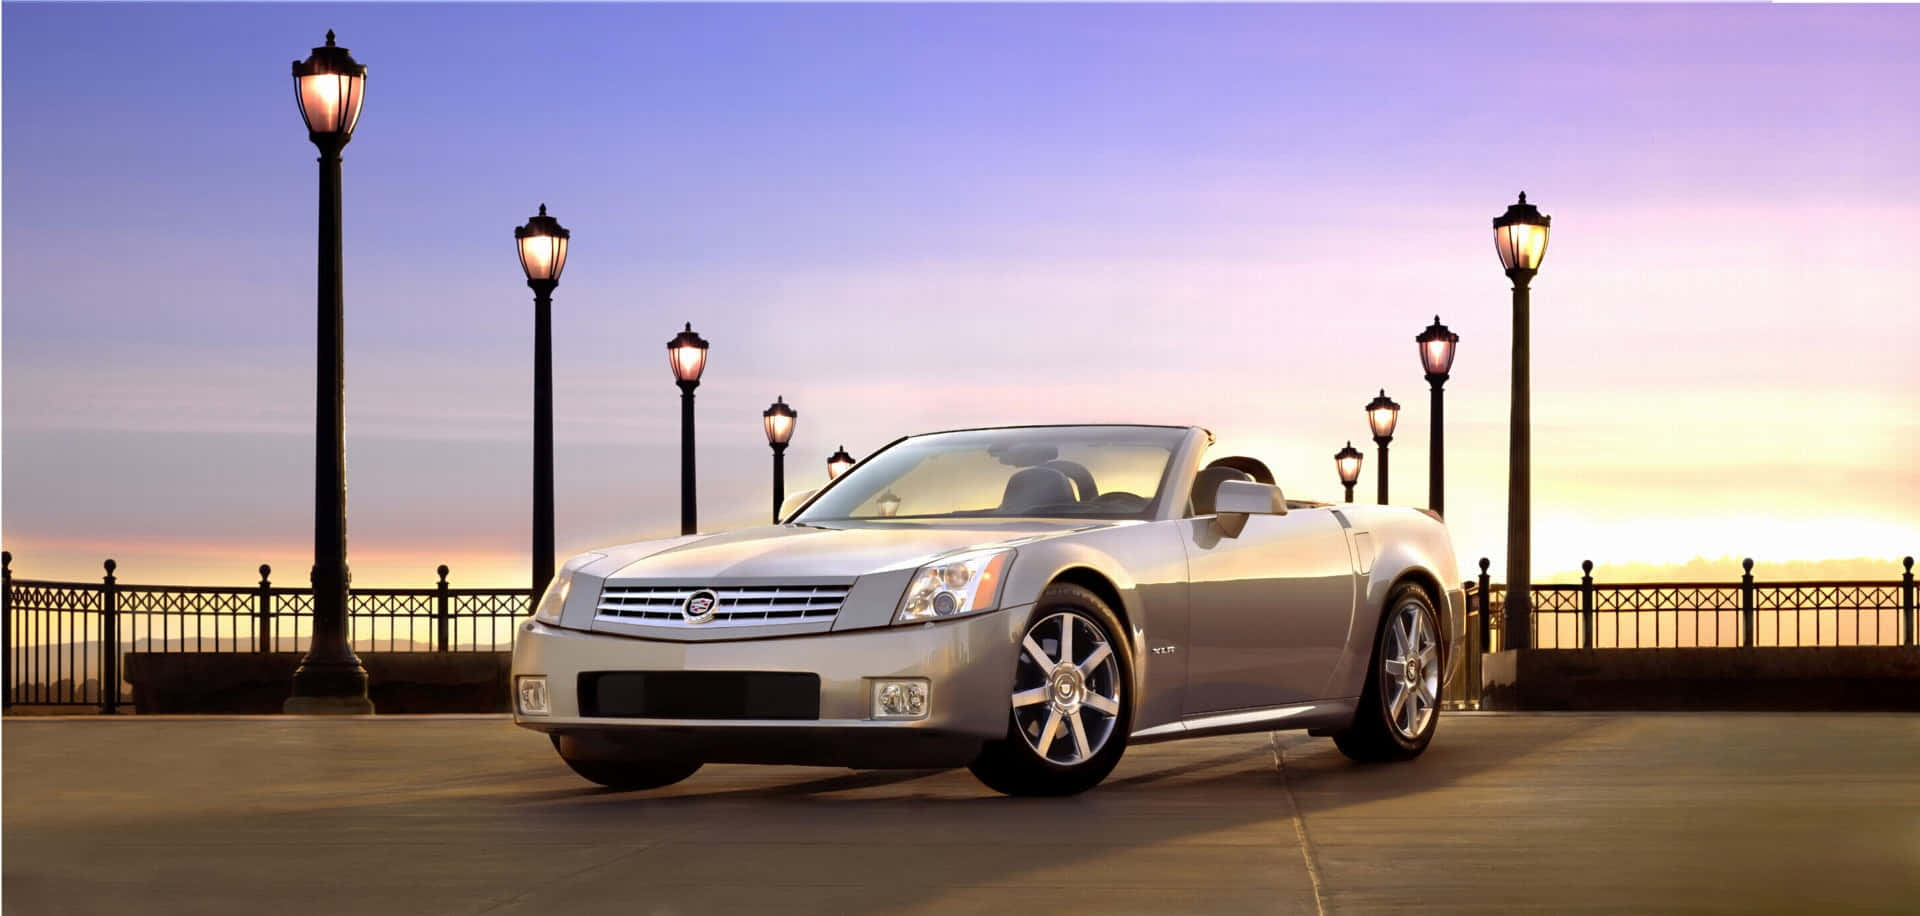 Sleek Cadillac XLR on Display in a Stunning Outdoor Setting Wallpaper